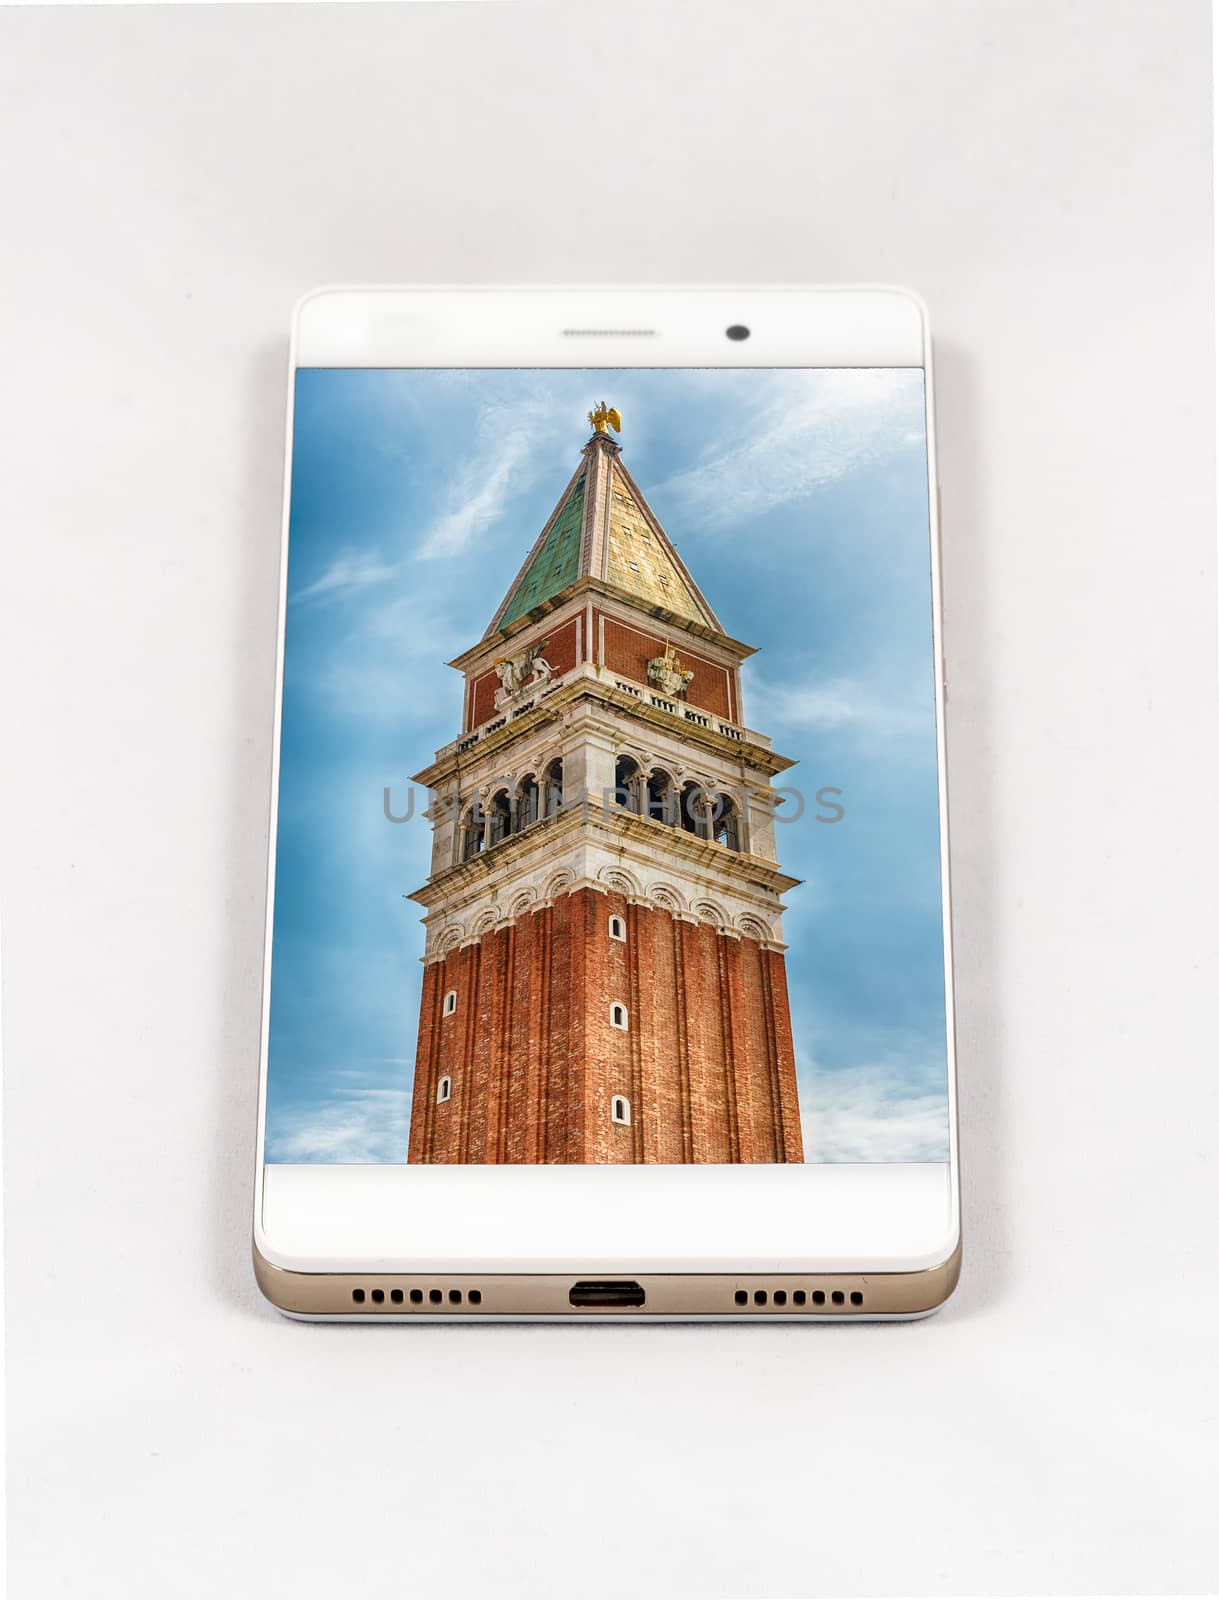 Modern smartphone displaying full screen picture of Venice, Ital by marcorubino